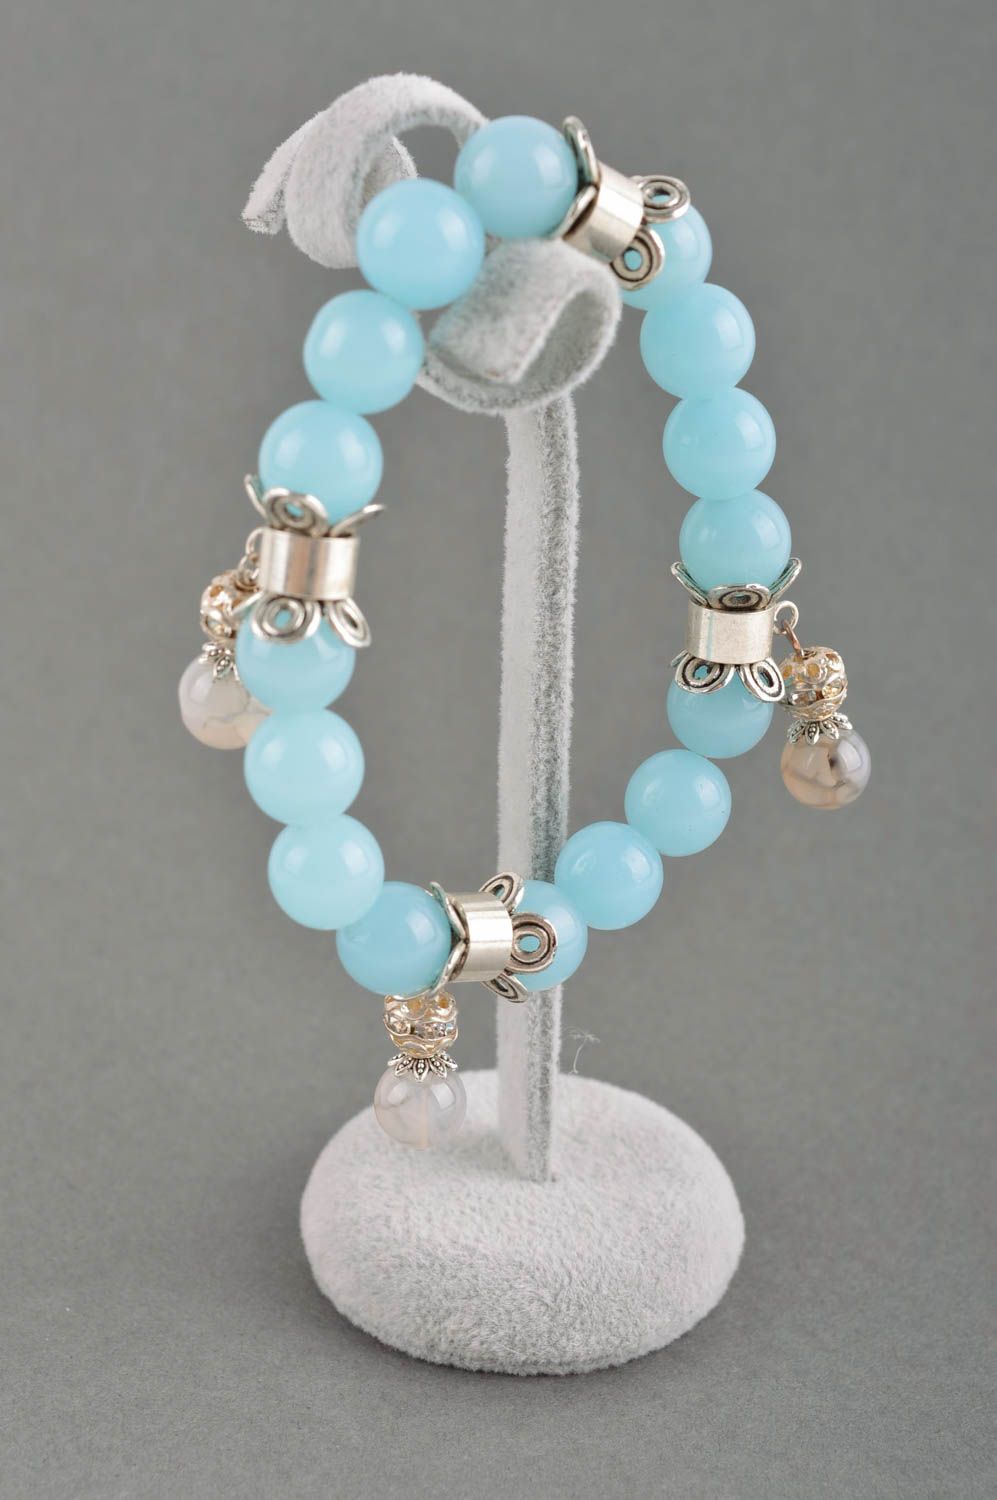 Handmade bracelet bead bracelet gemstone jewelry fashion accessories gift ideas photo 1